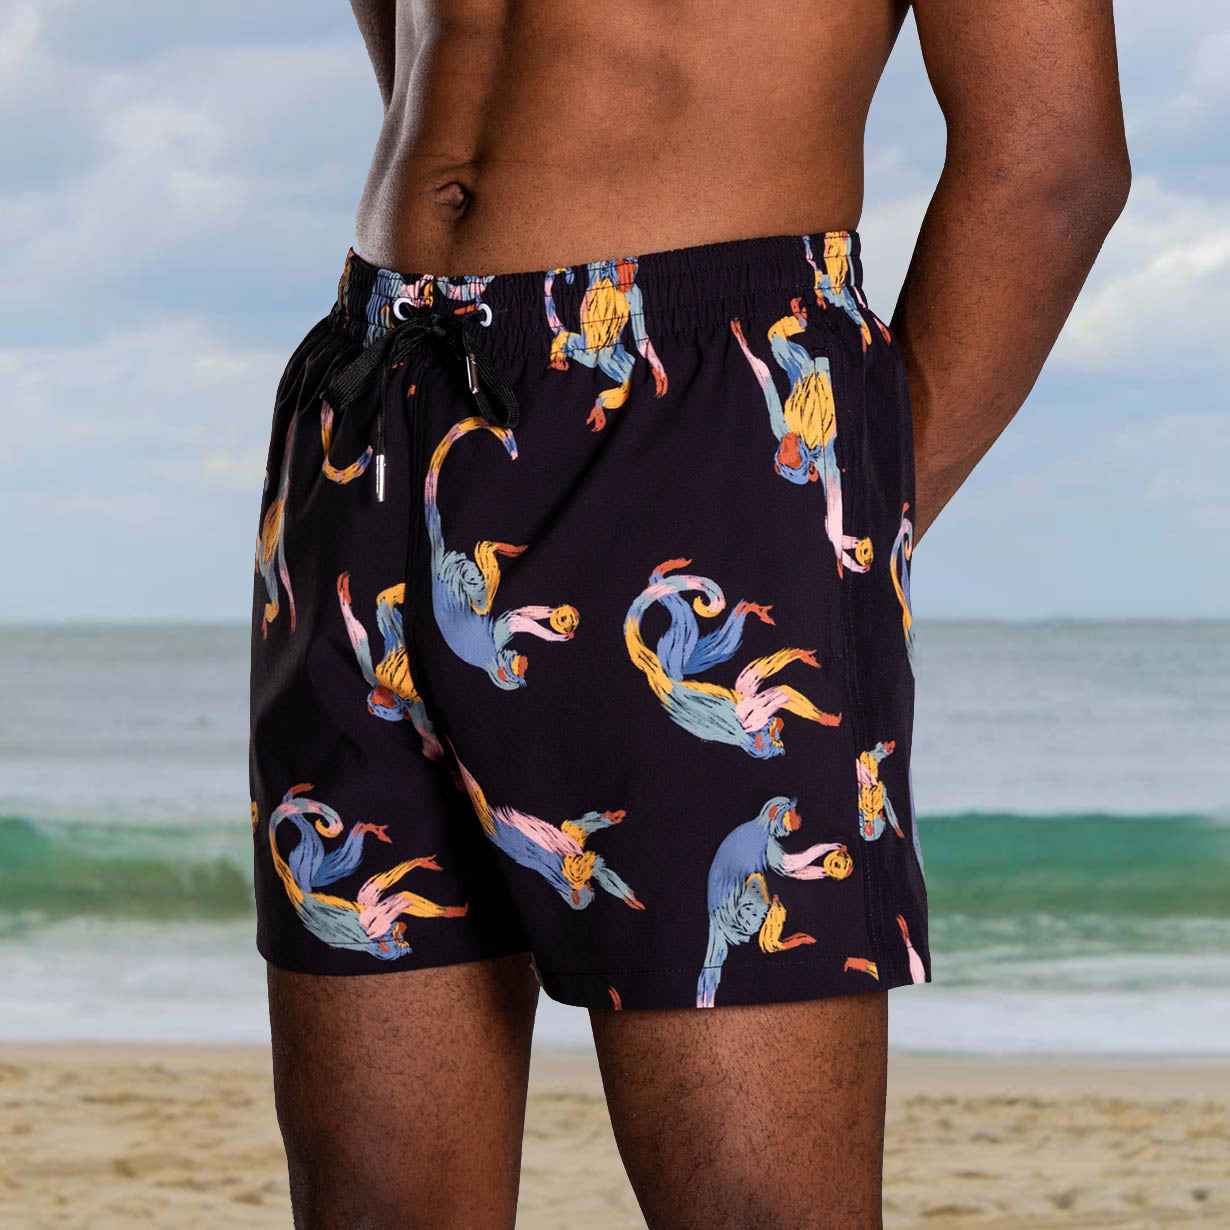 Vintage seaside resort style beach shorts